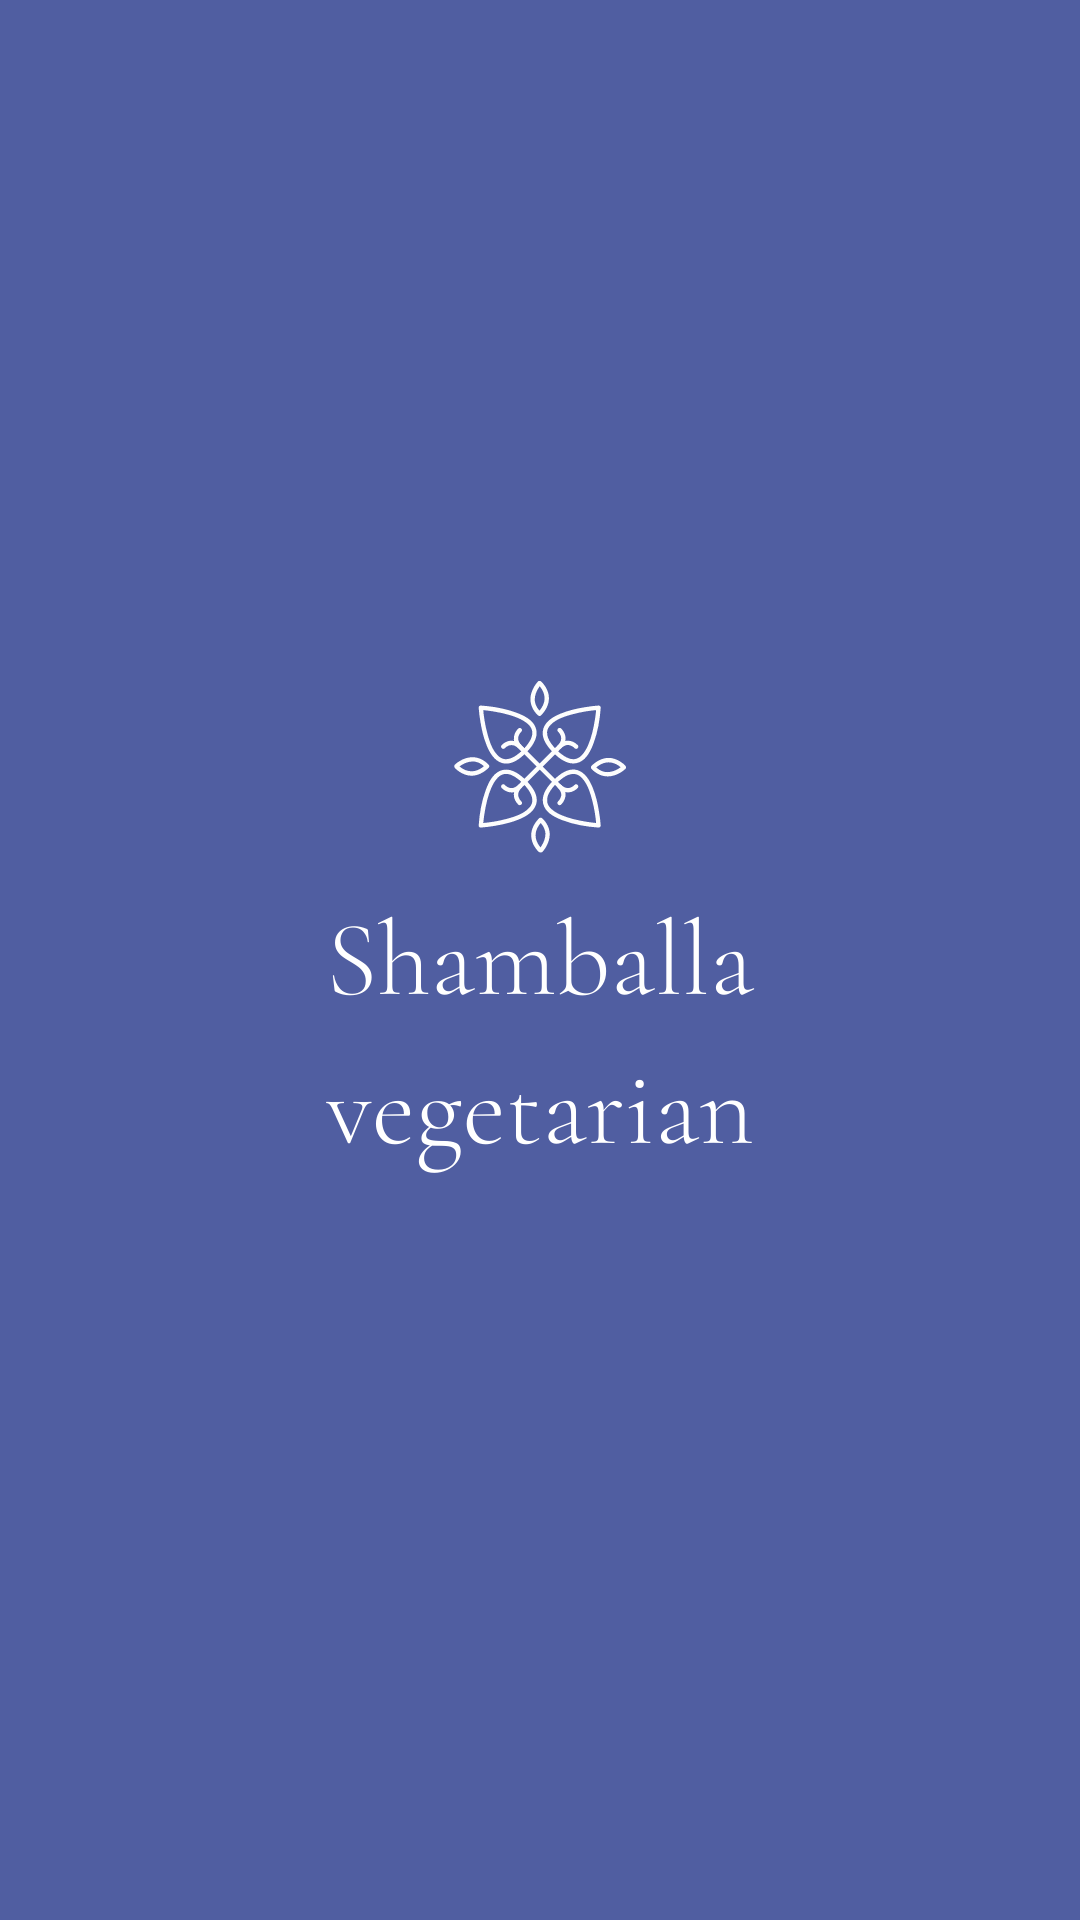 Shamballa vegetarian